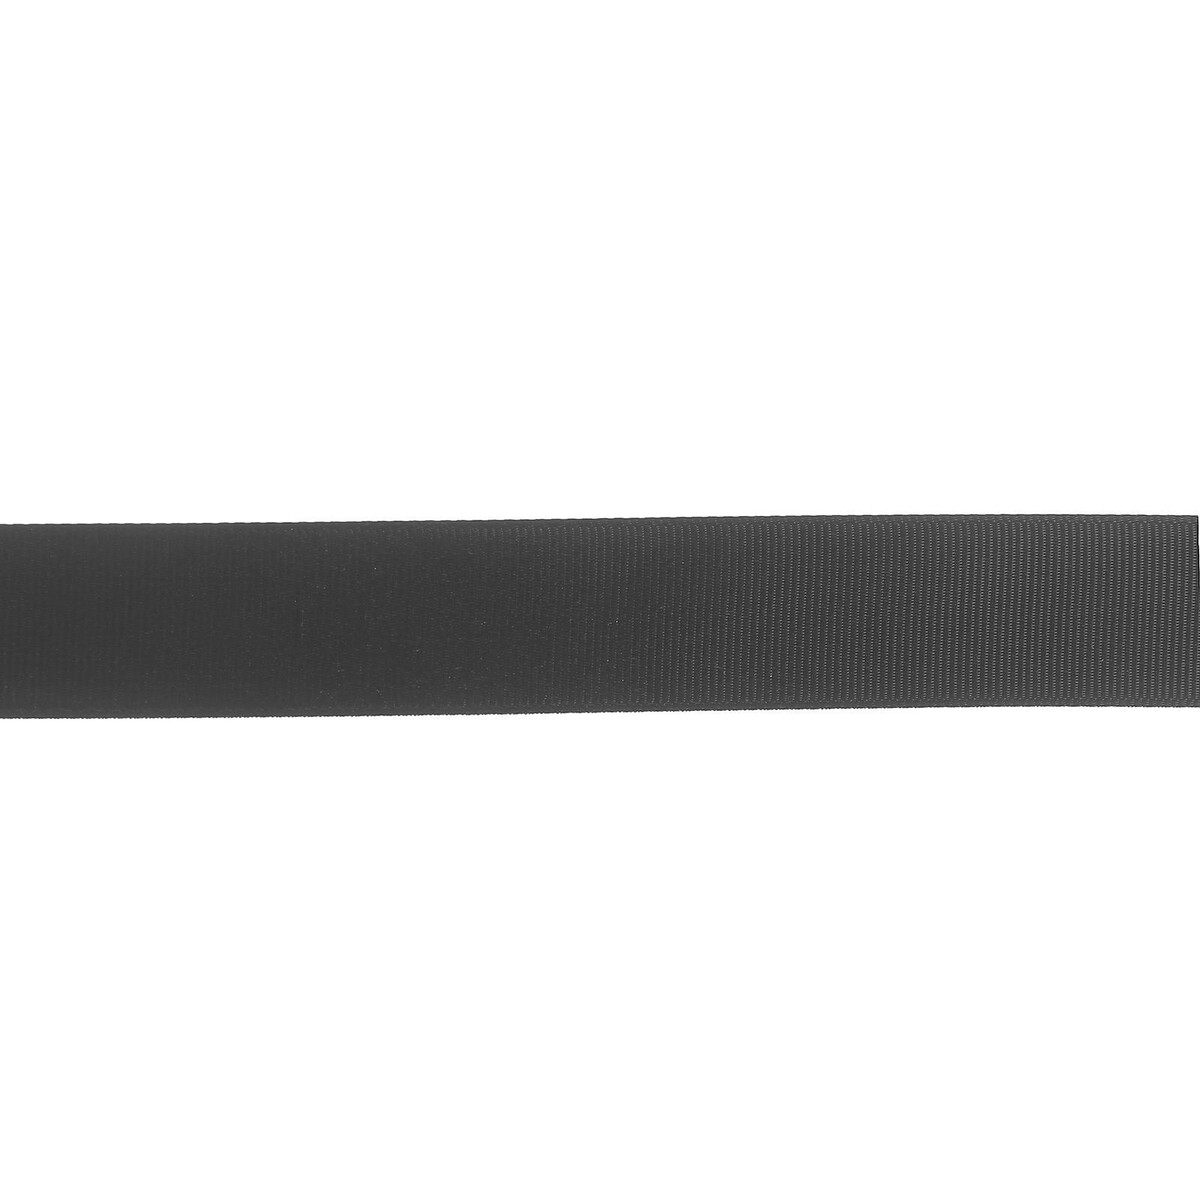 Репсовая лента черная ширина 2,5 см в рулоне 91 метр